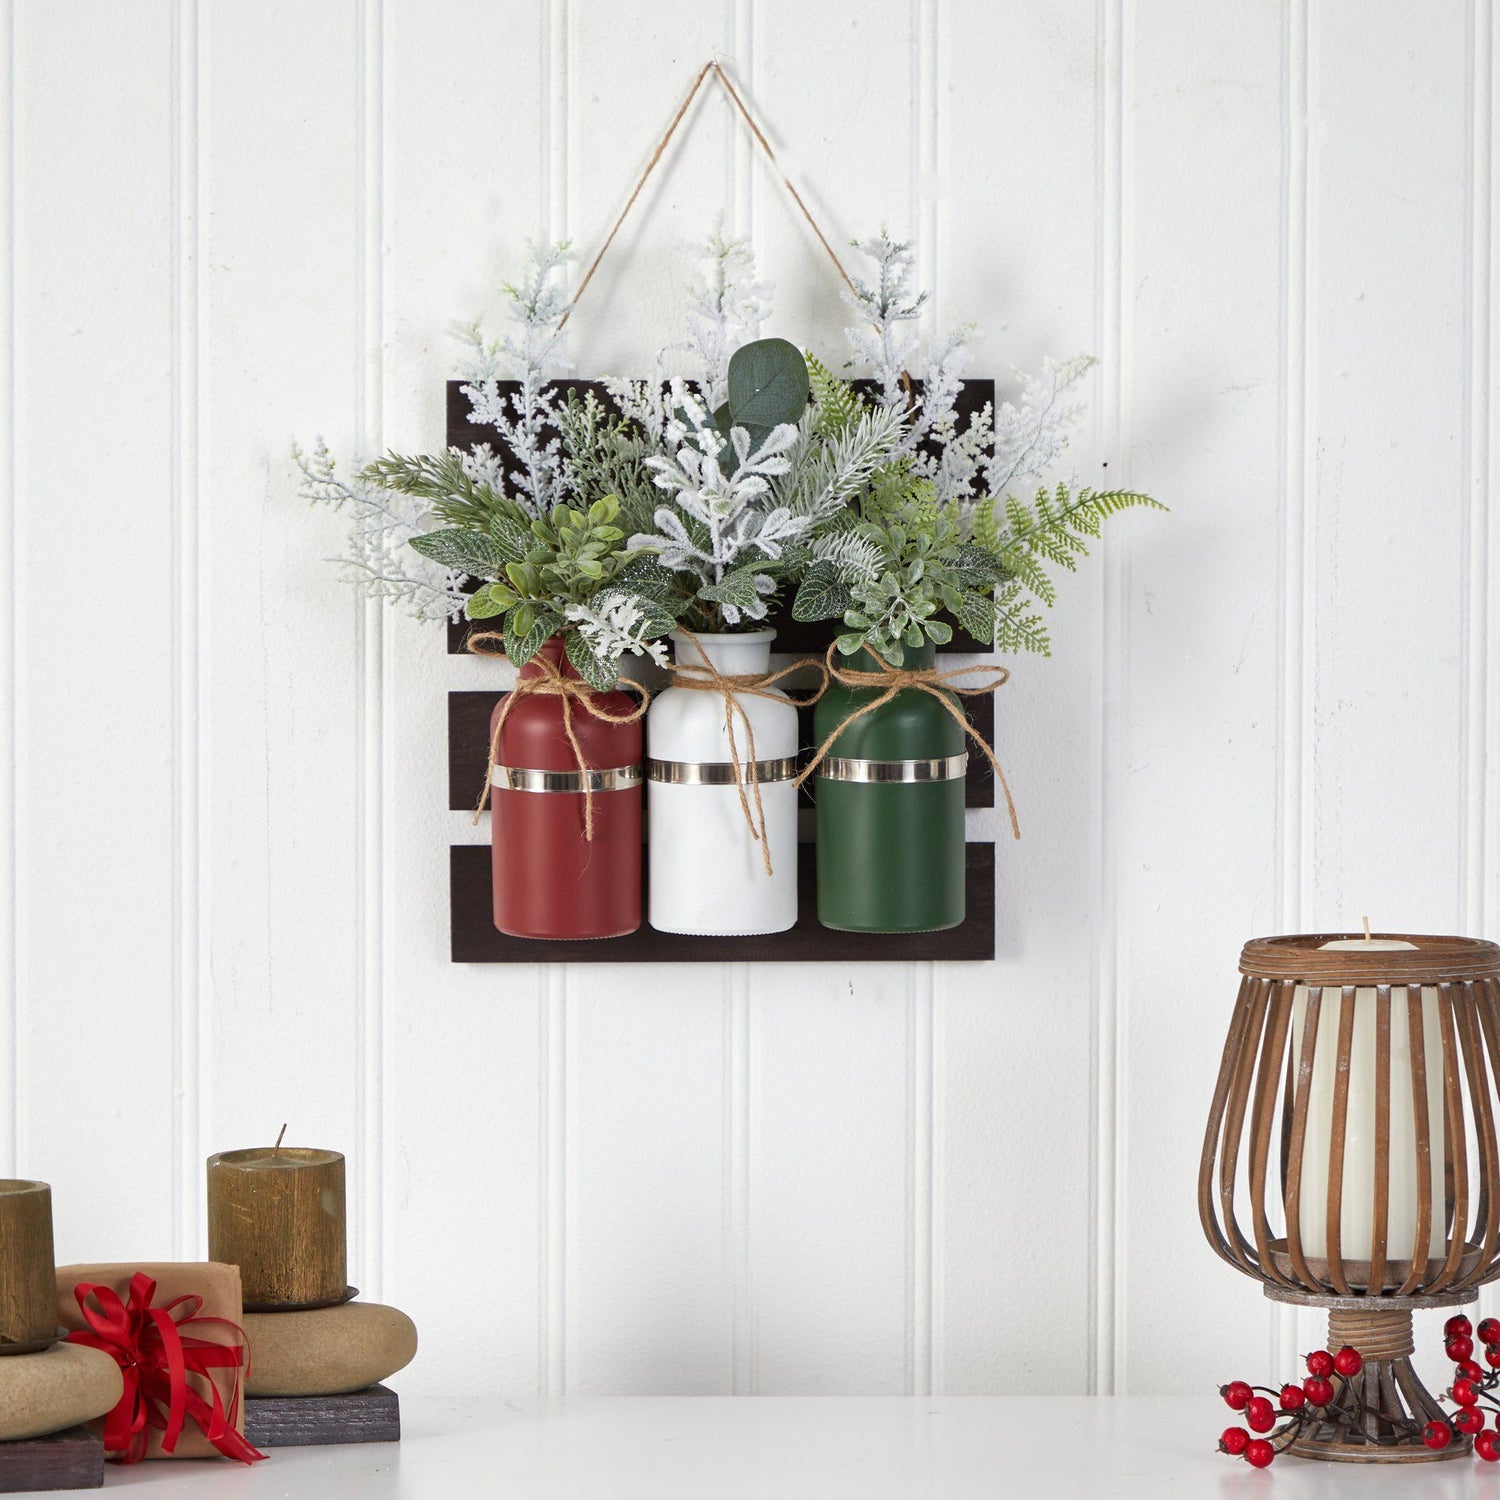 17” Holiday Assorted Christmas Pine Hanging Three Piece Mason Jar Arrangement Wall Art Décor